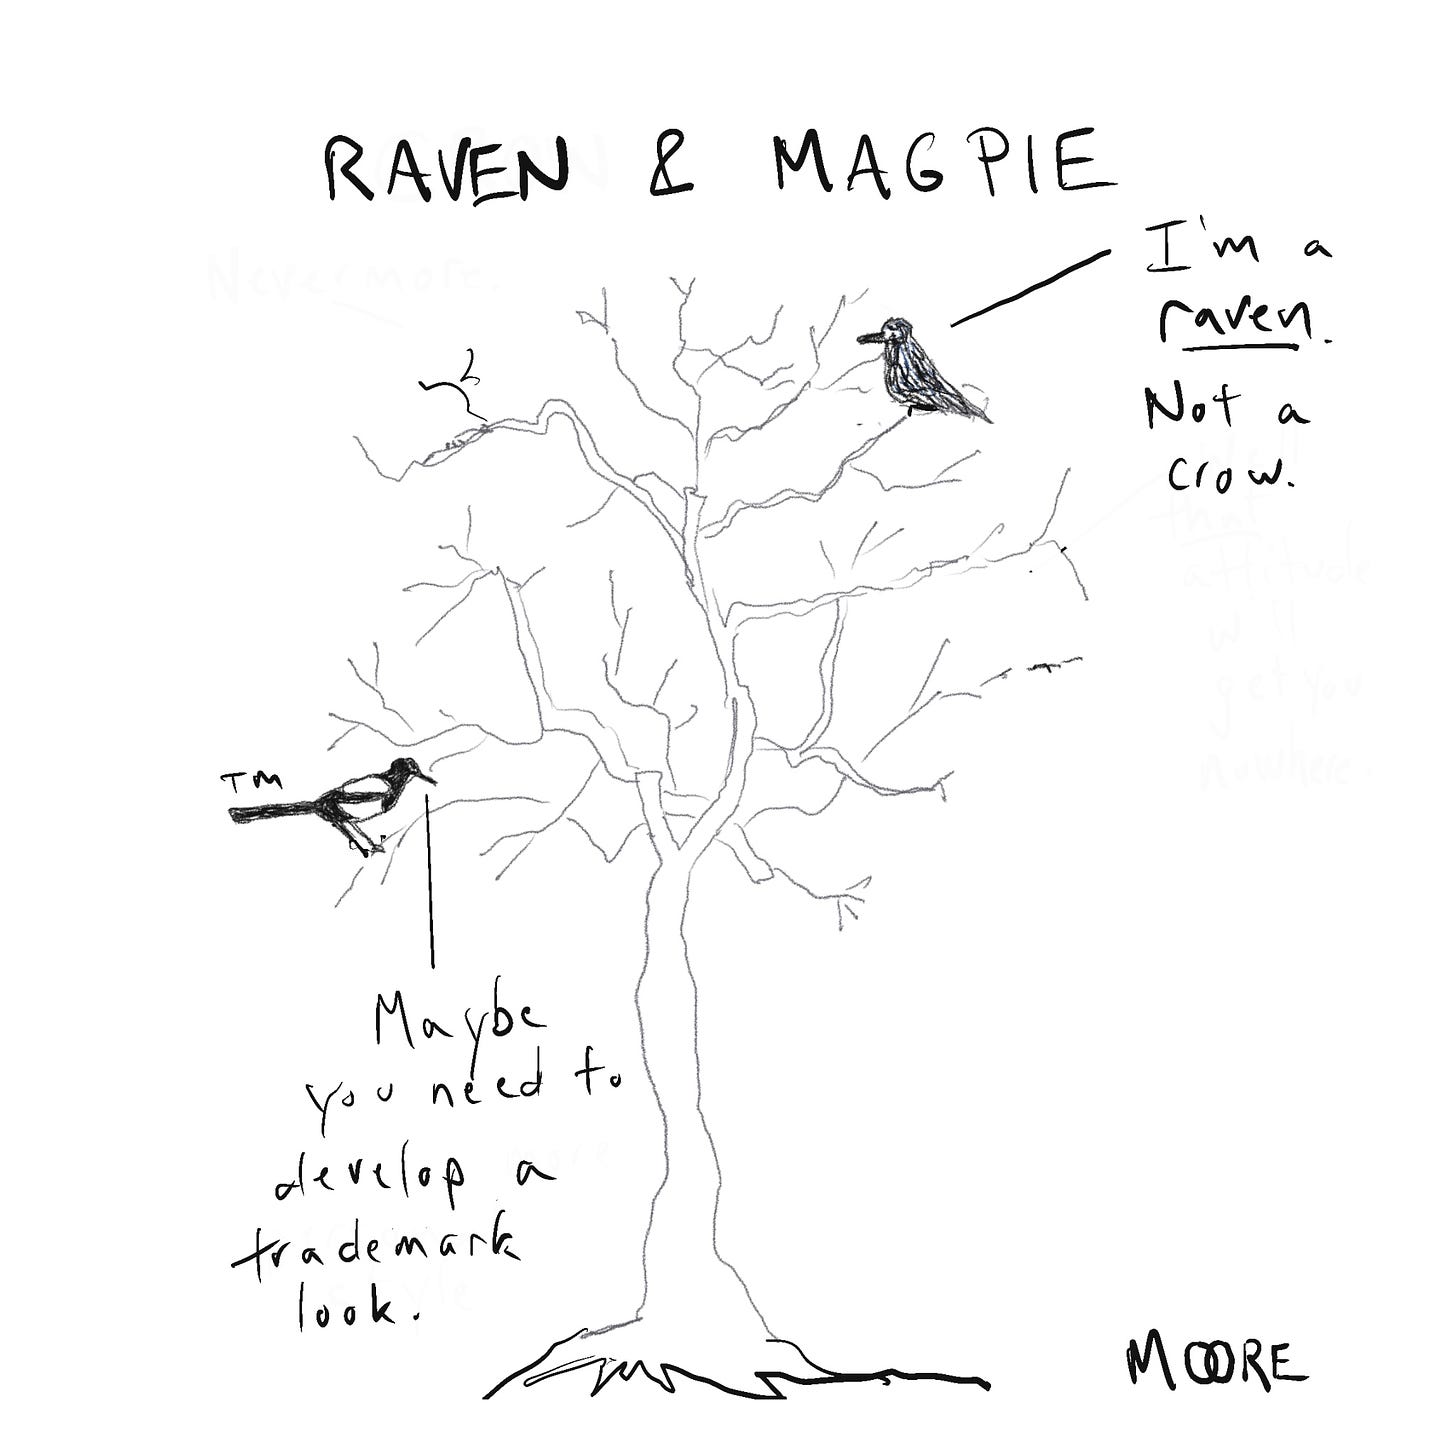 Raven and crow discuss trademark looks